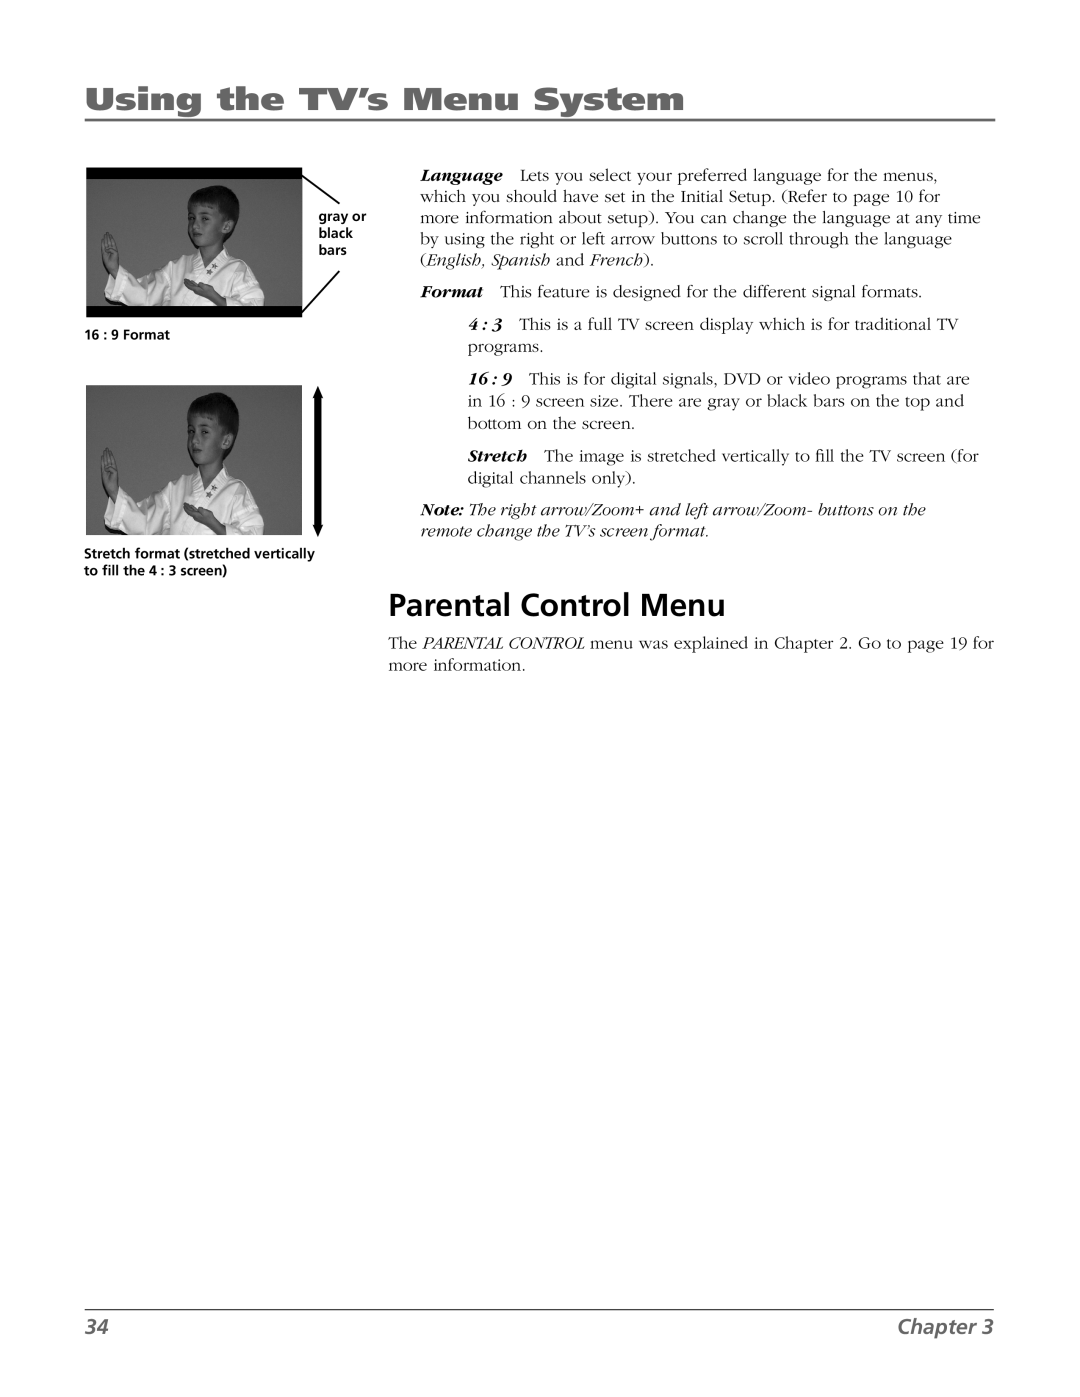 RCA 32V524T, 32v434t manual Parental Control Menu, Using the TV’s Menu System, Chapter 